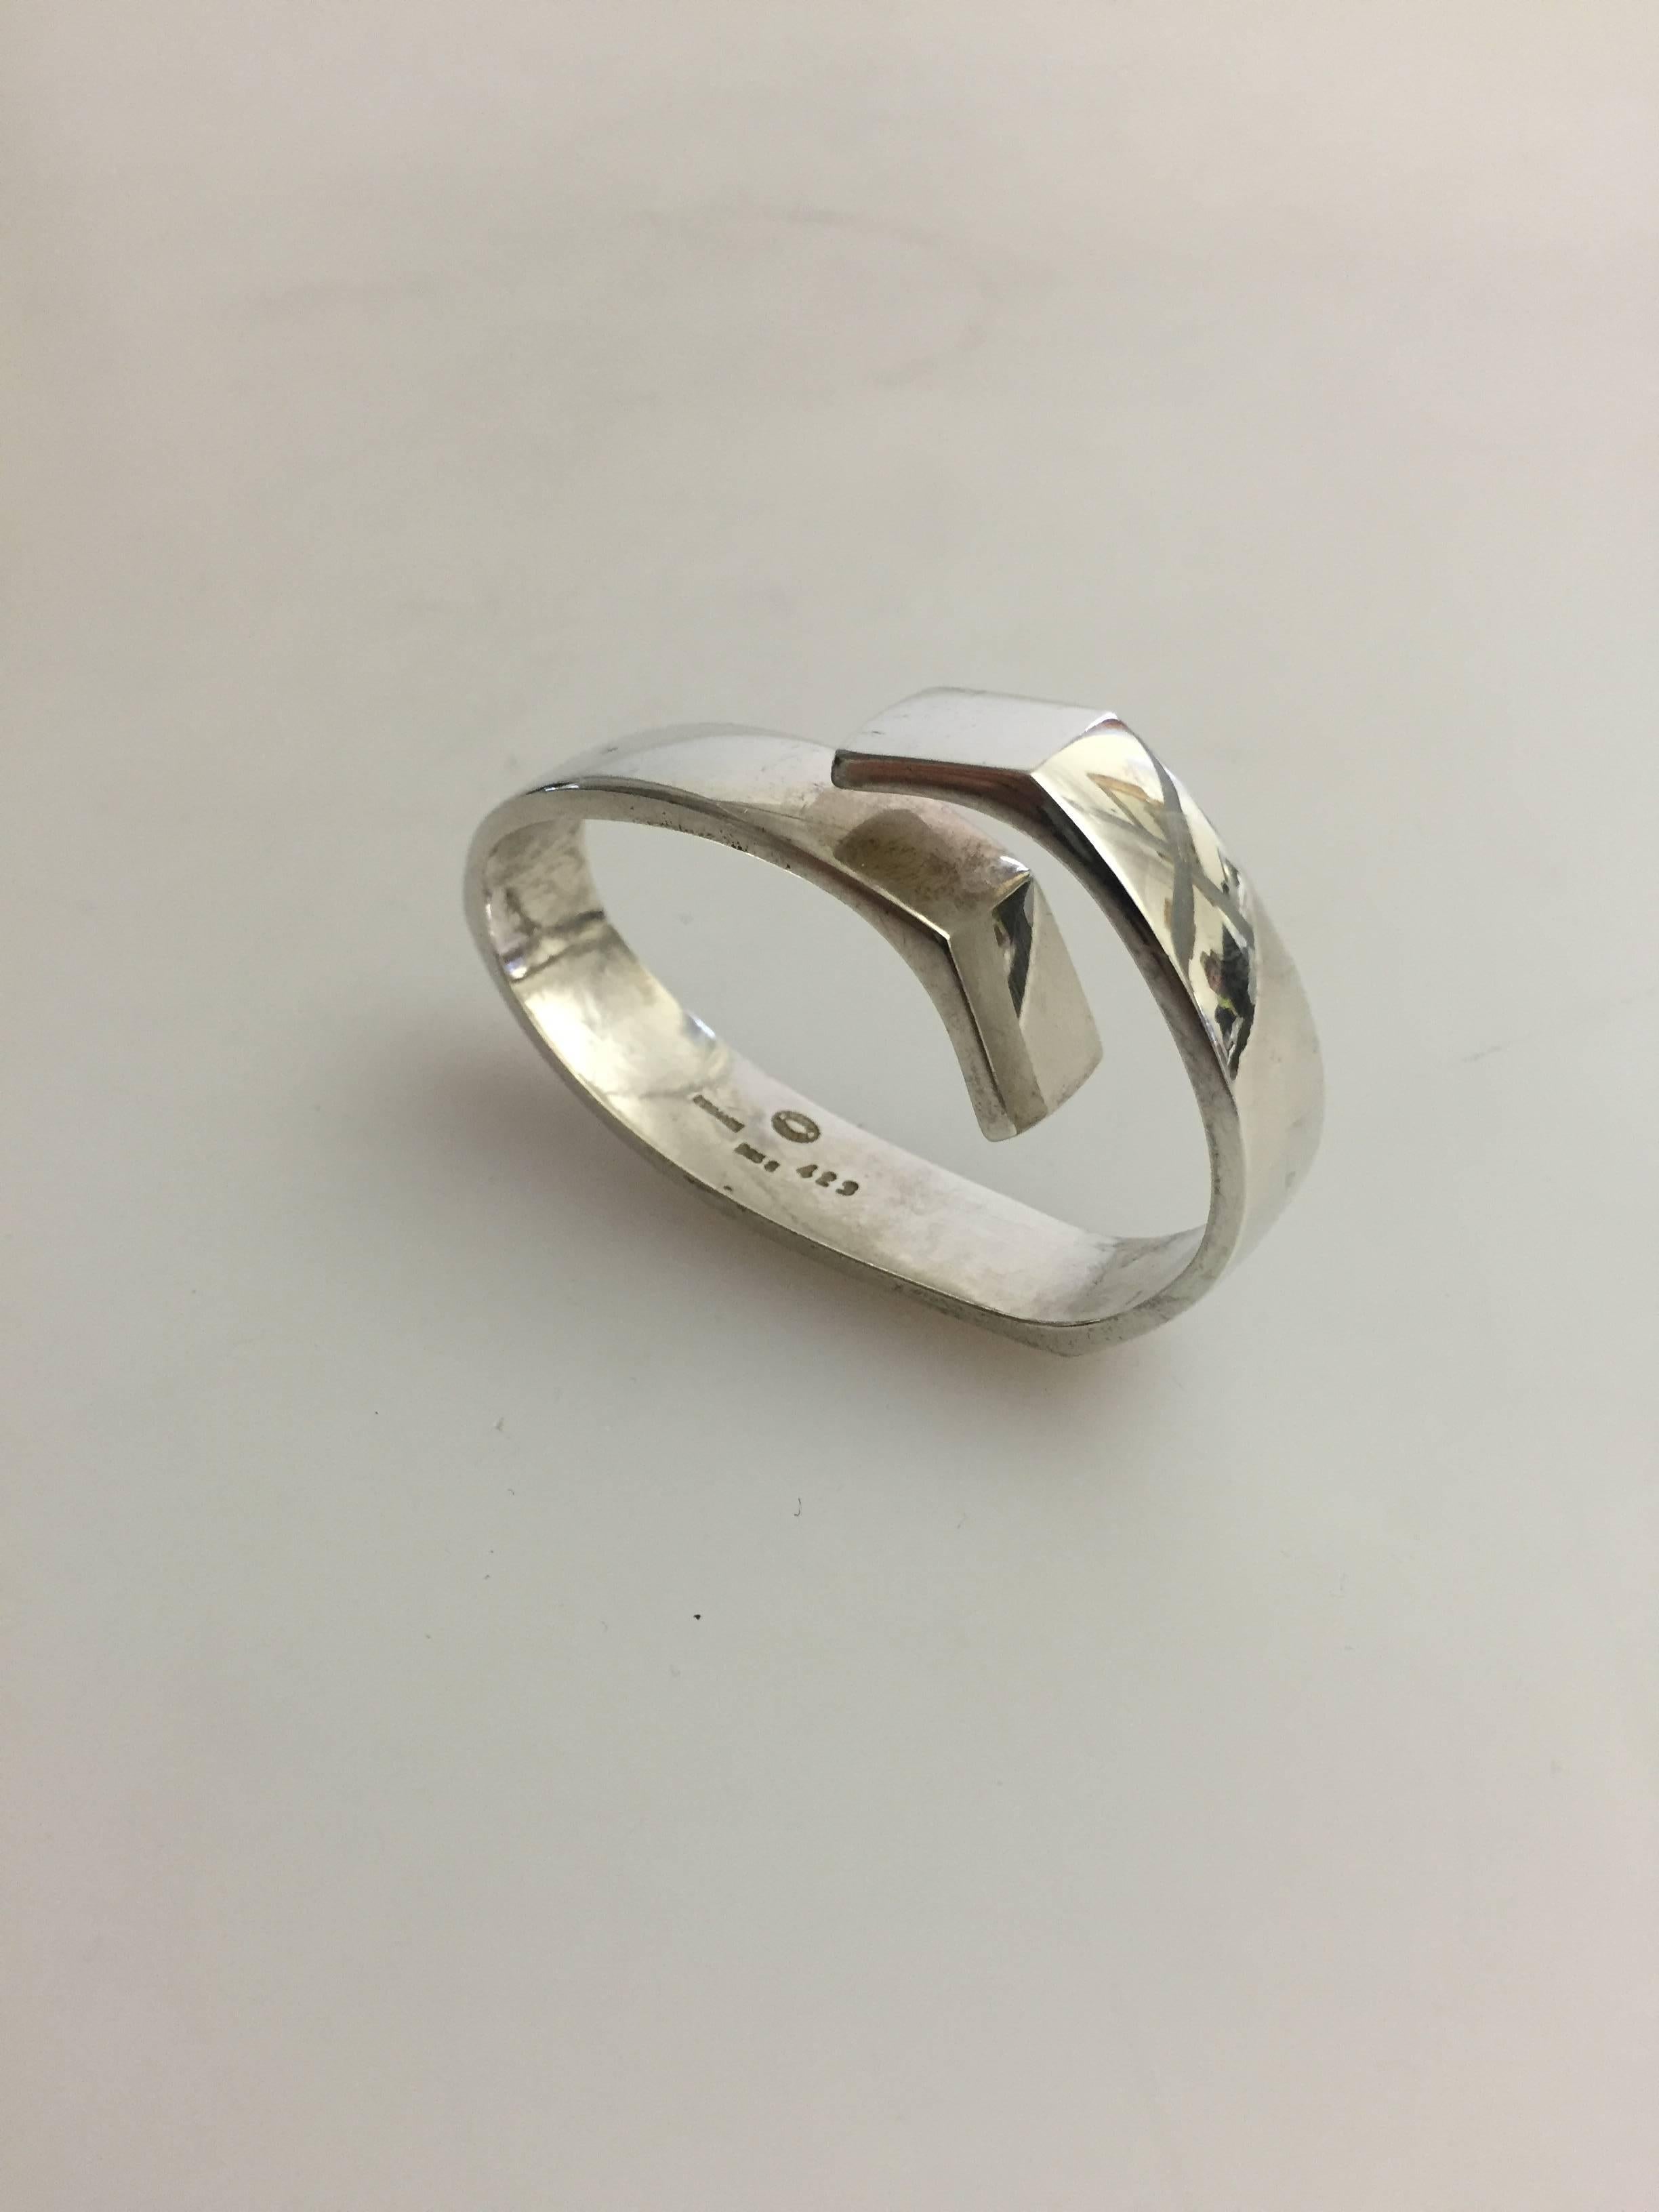 Georg Jensen sterling silver napkin ring #423.

 Measures: 5.5 cm x 3.5 cm (2 11/64